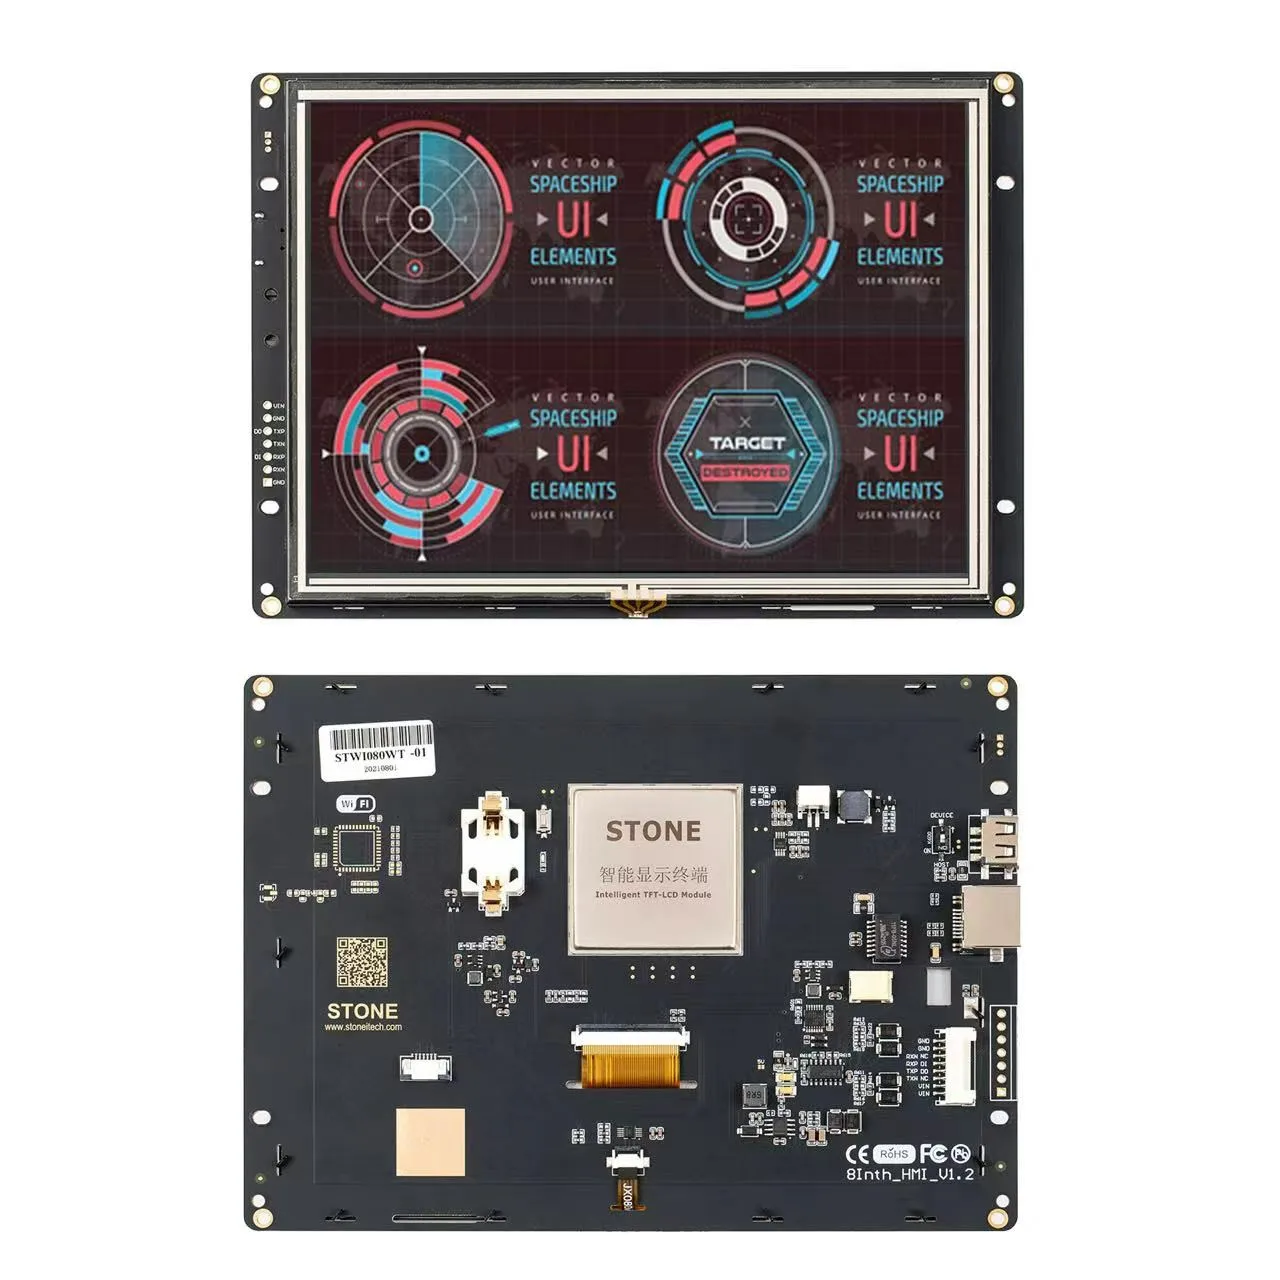 8 TFT LCD Screen Smart Serial Display HMI for Arduino RaspBerry Pi Makes Programming Fast & Easy